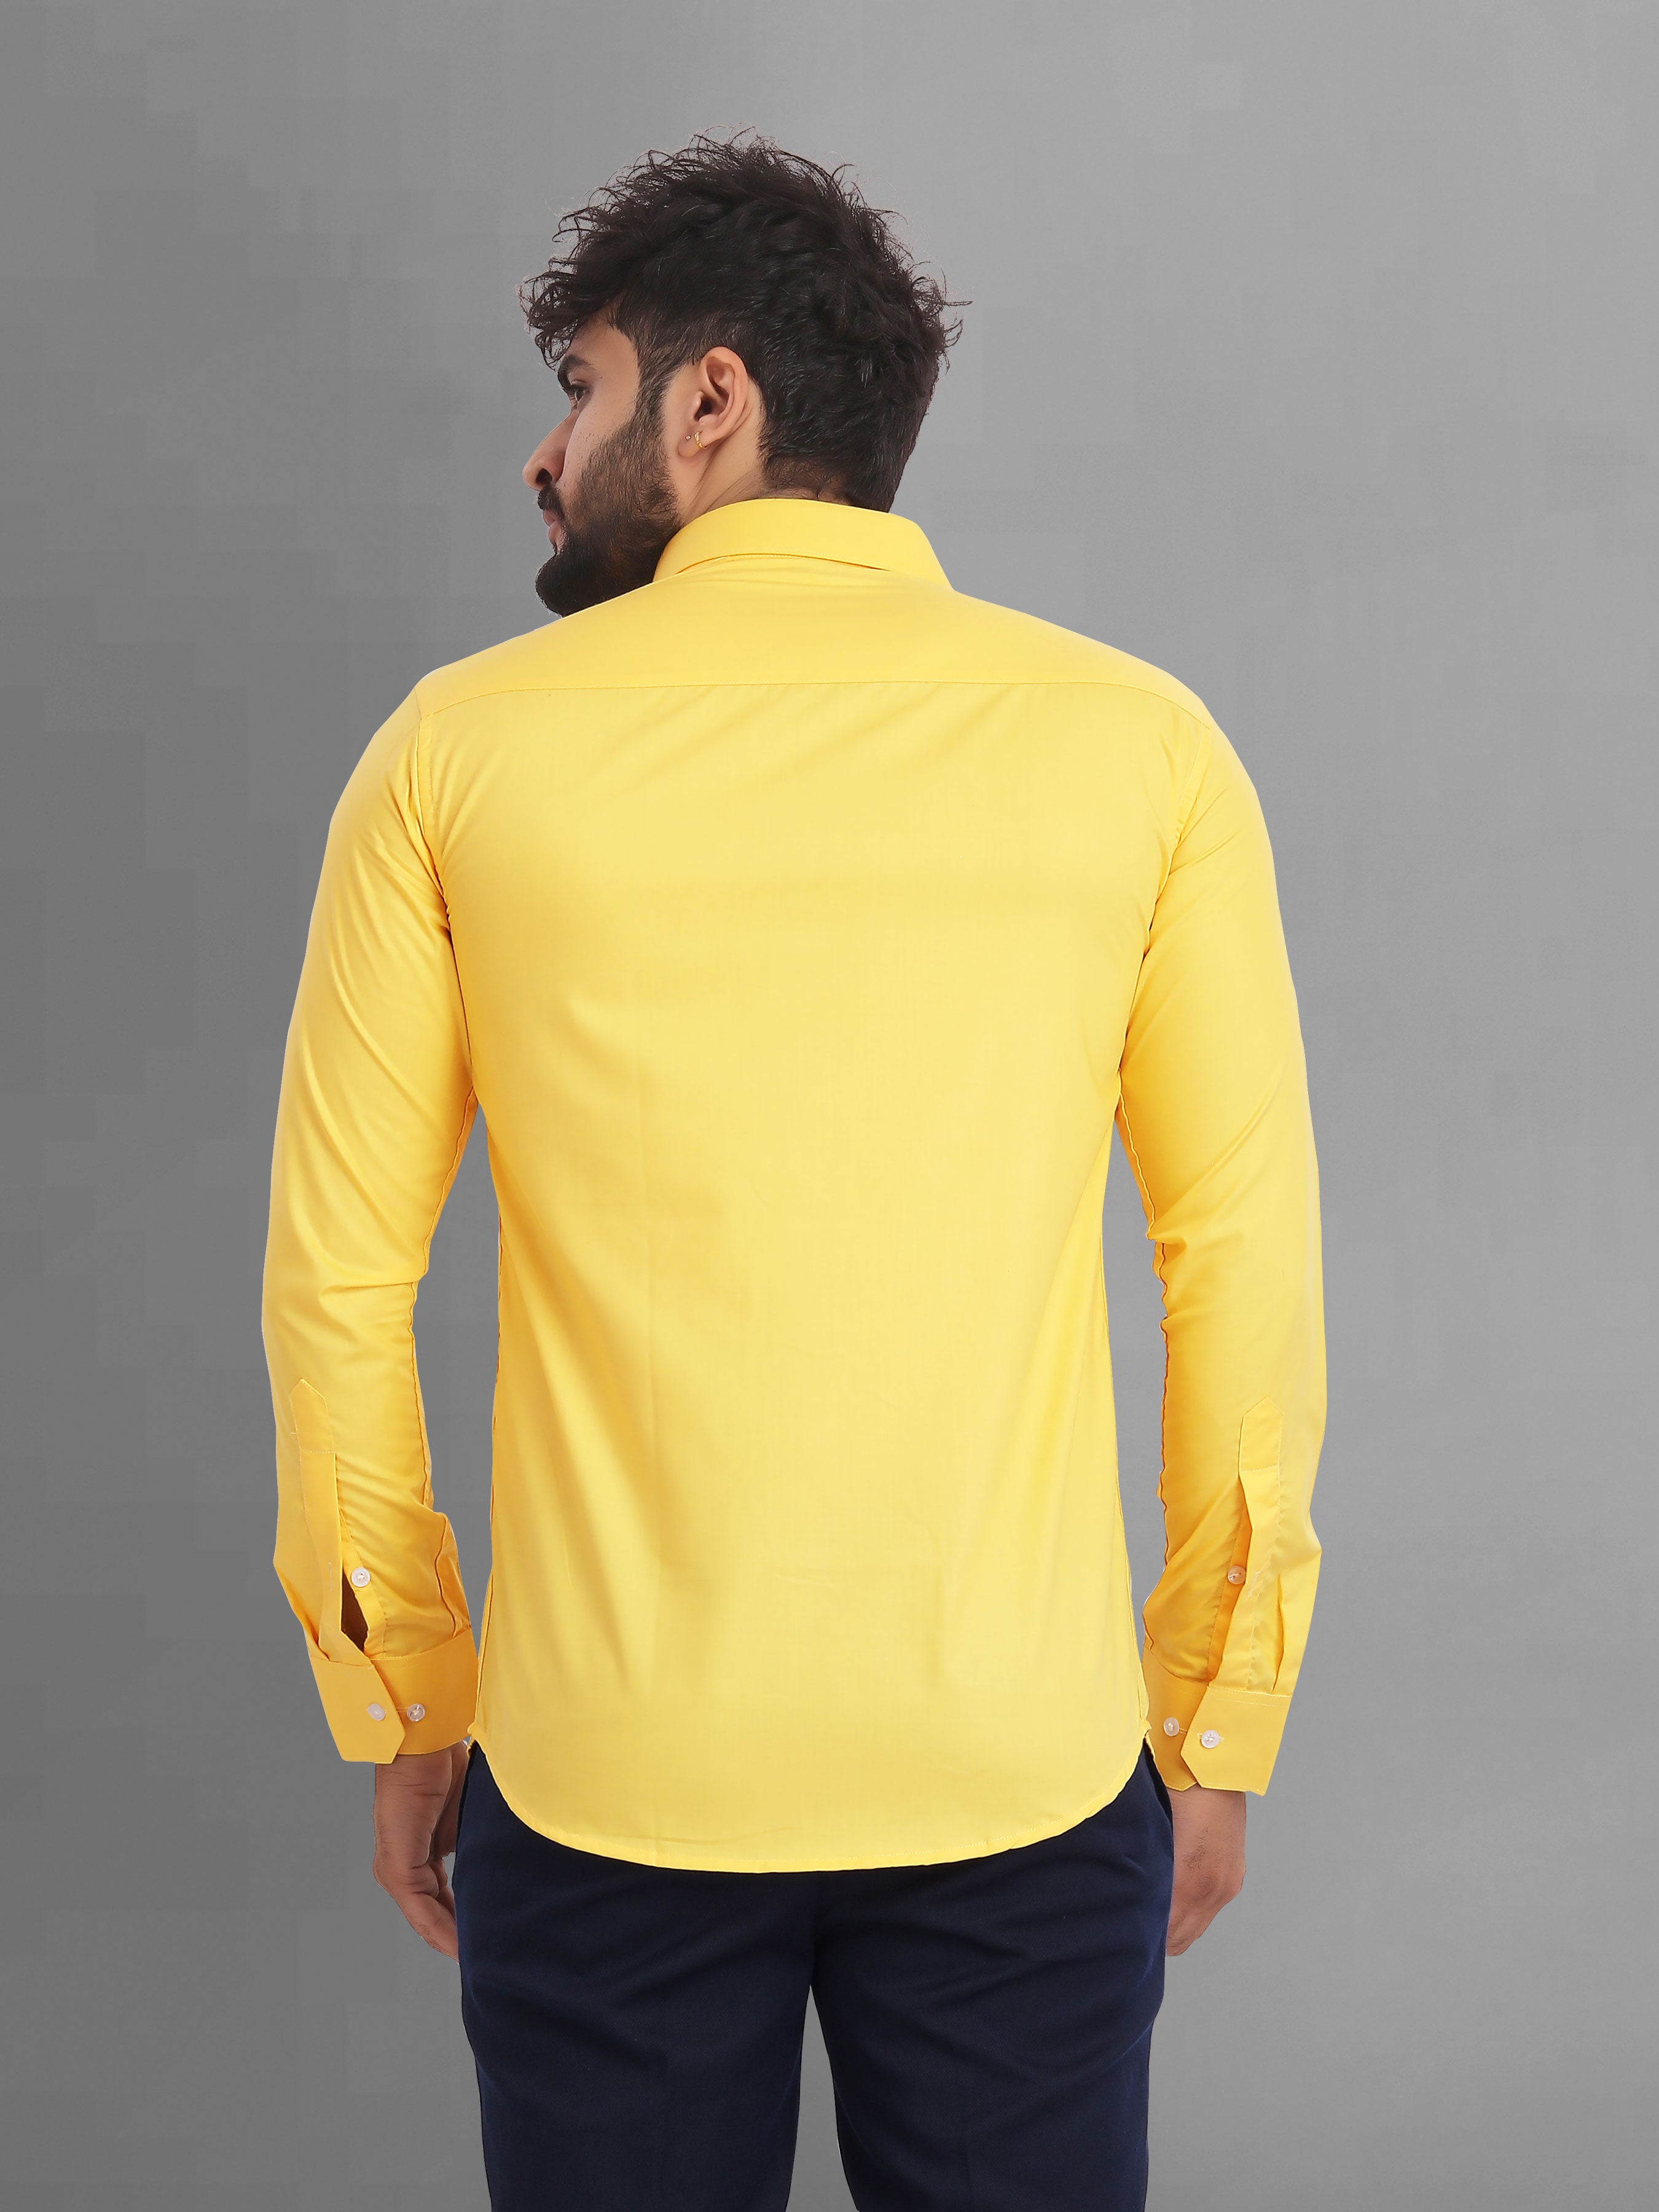 Light yellow solid cotton shirt